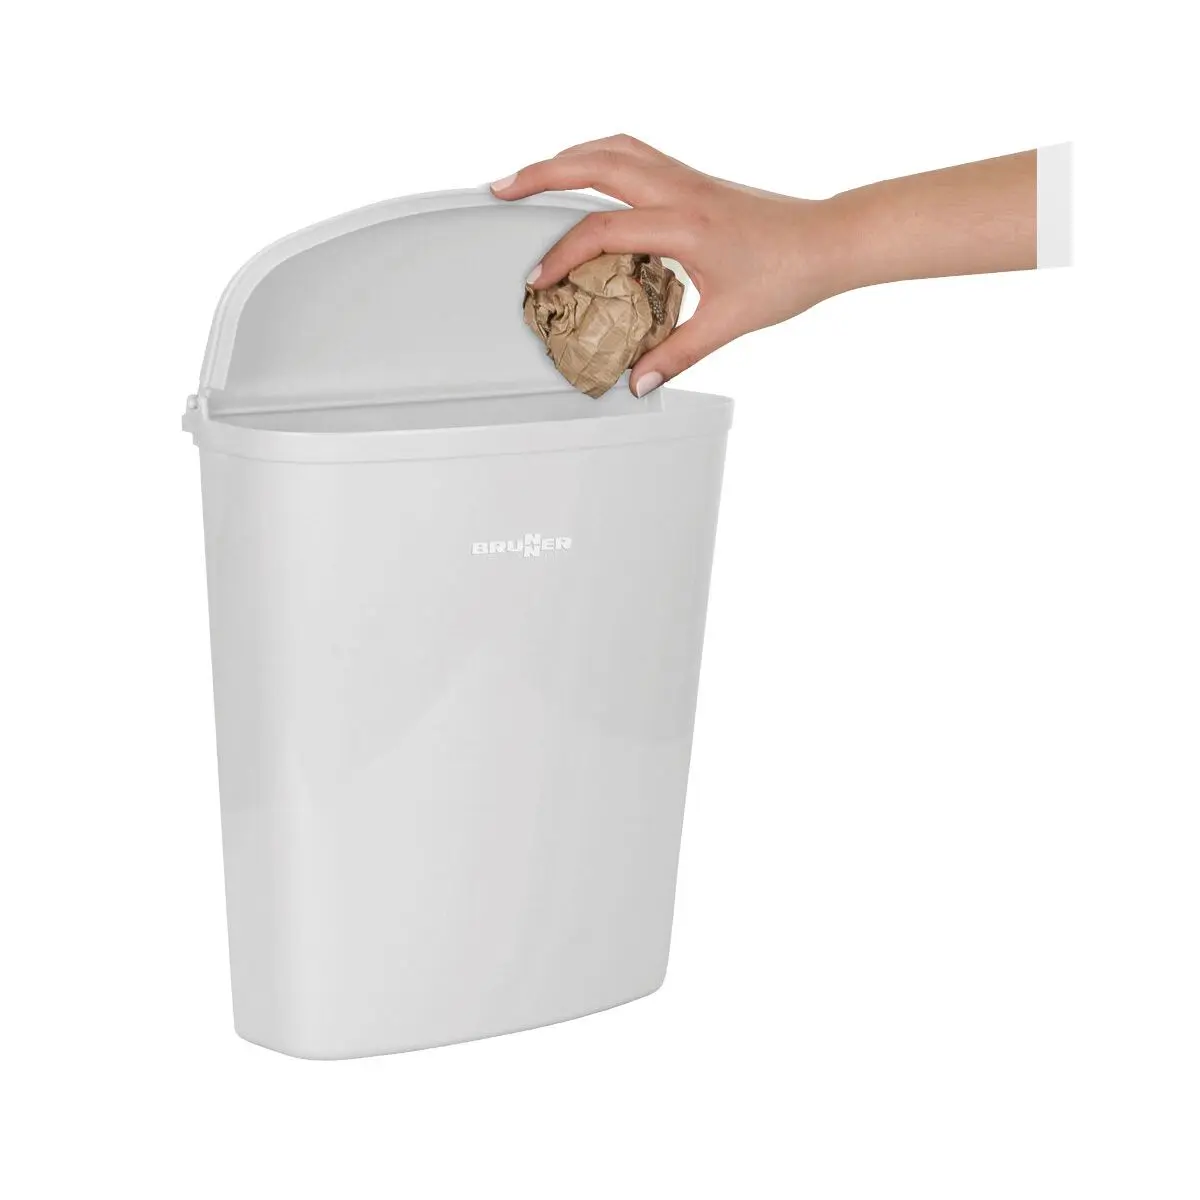 Stĺpikový odpadkový kôš - 5,5 litra